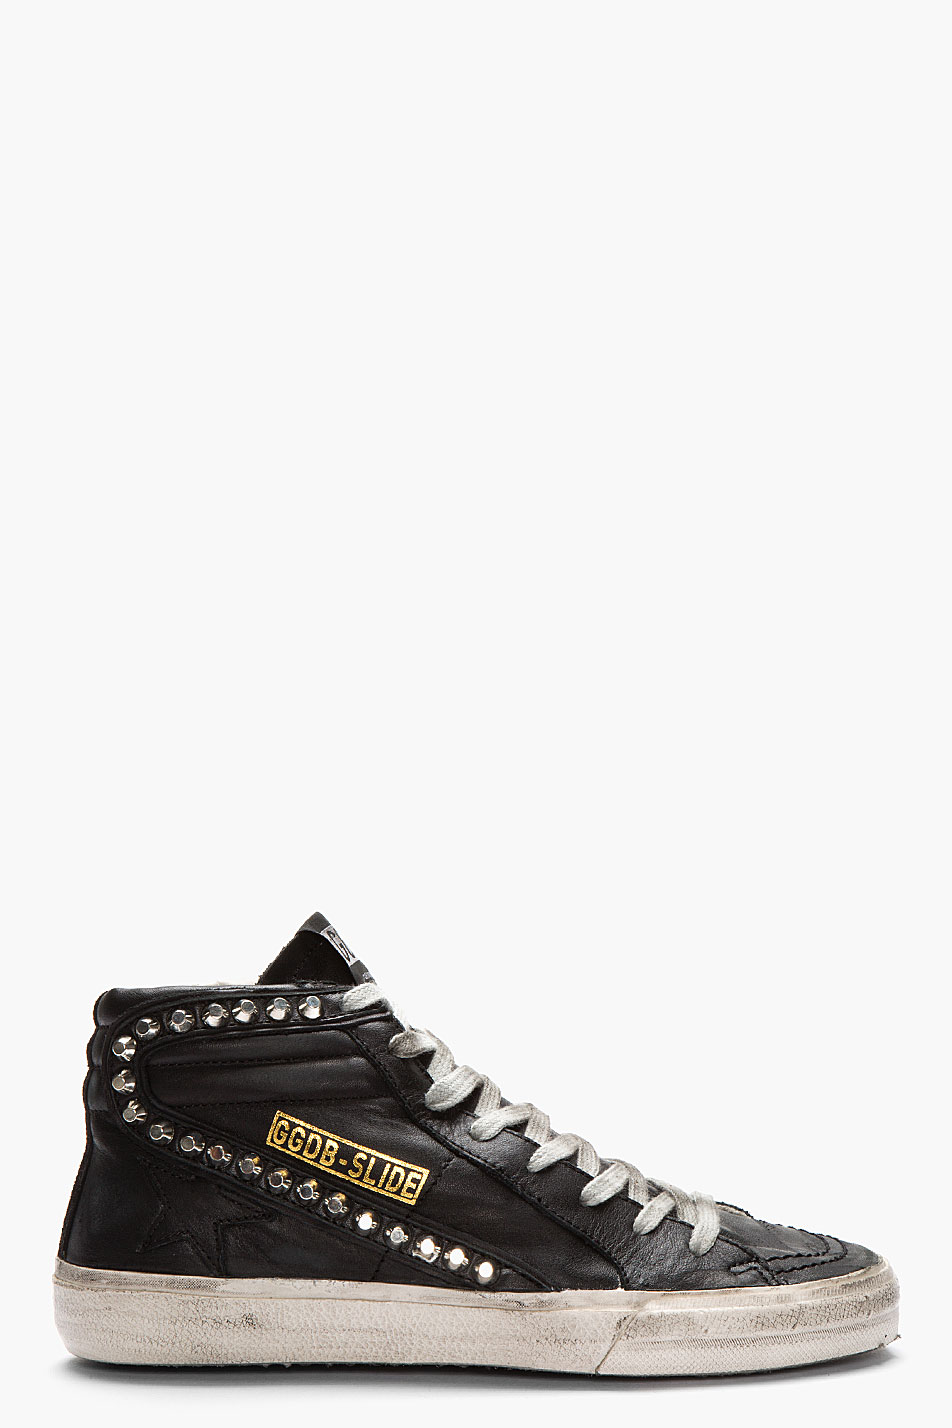 Lyst - Golden Goose Deluxe Brand Black Leather Studded Slide Sneakers ...